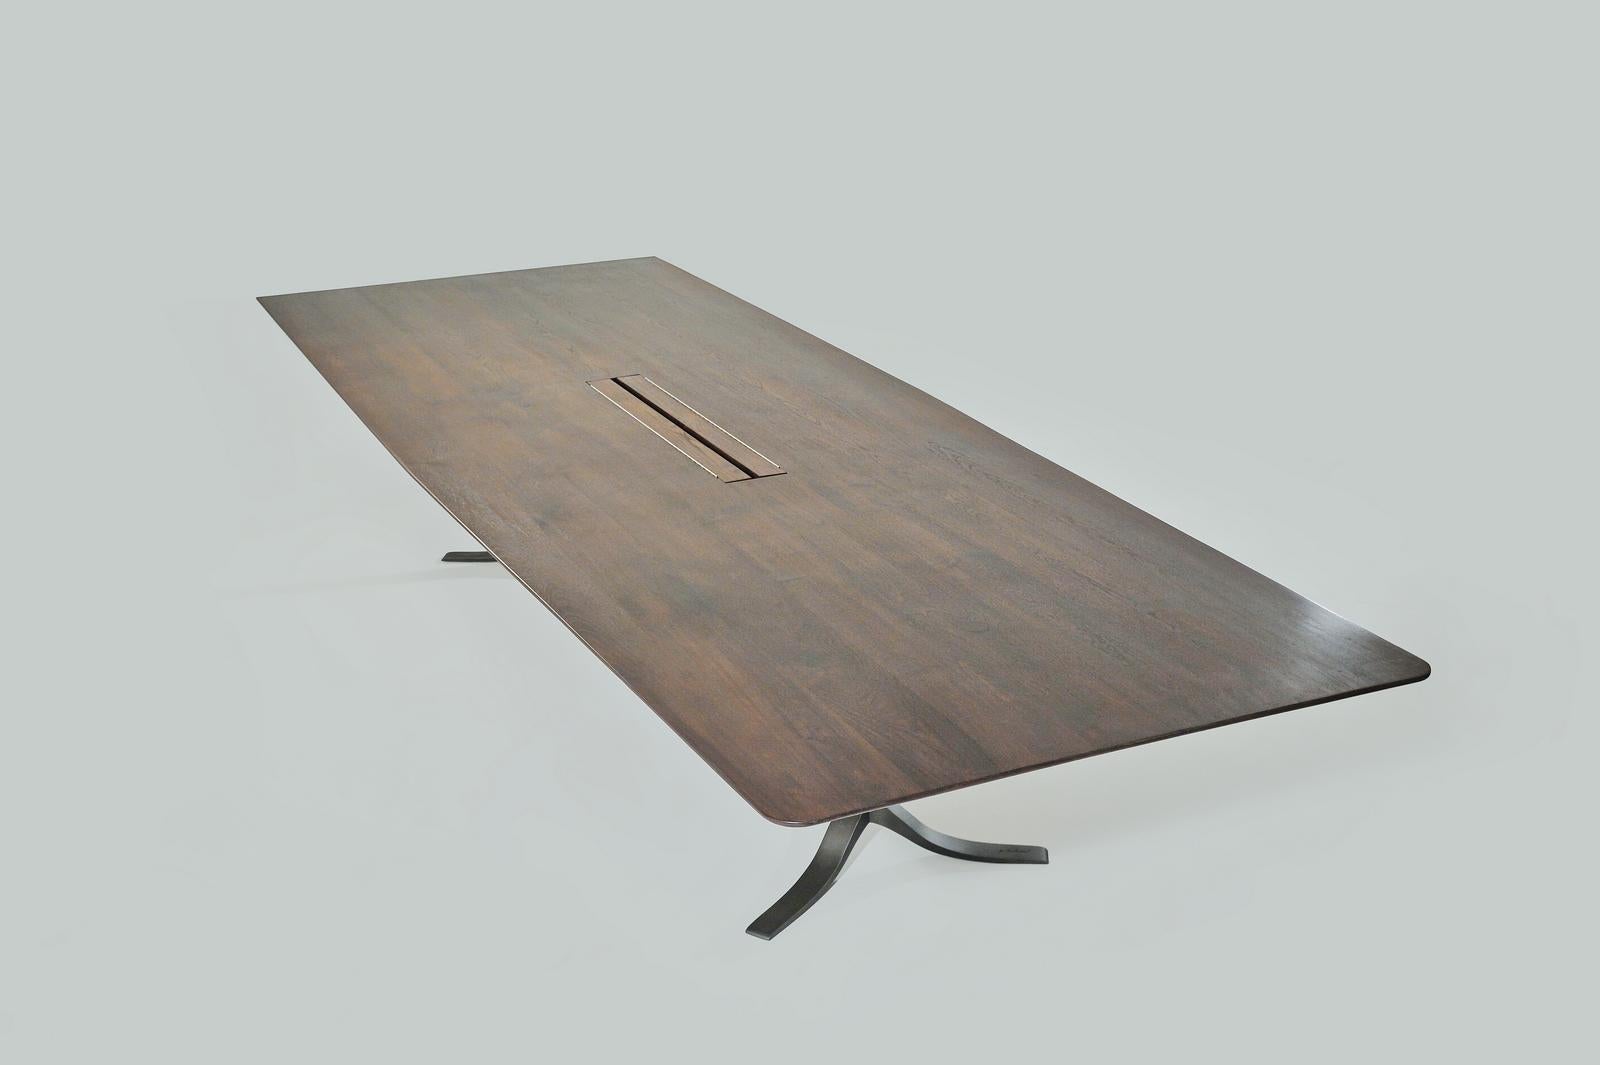 Thai Bespoke Board Room Table, Reclaimed Wood, Sand Cast Brass Base, by P. Tendercool For Sale